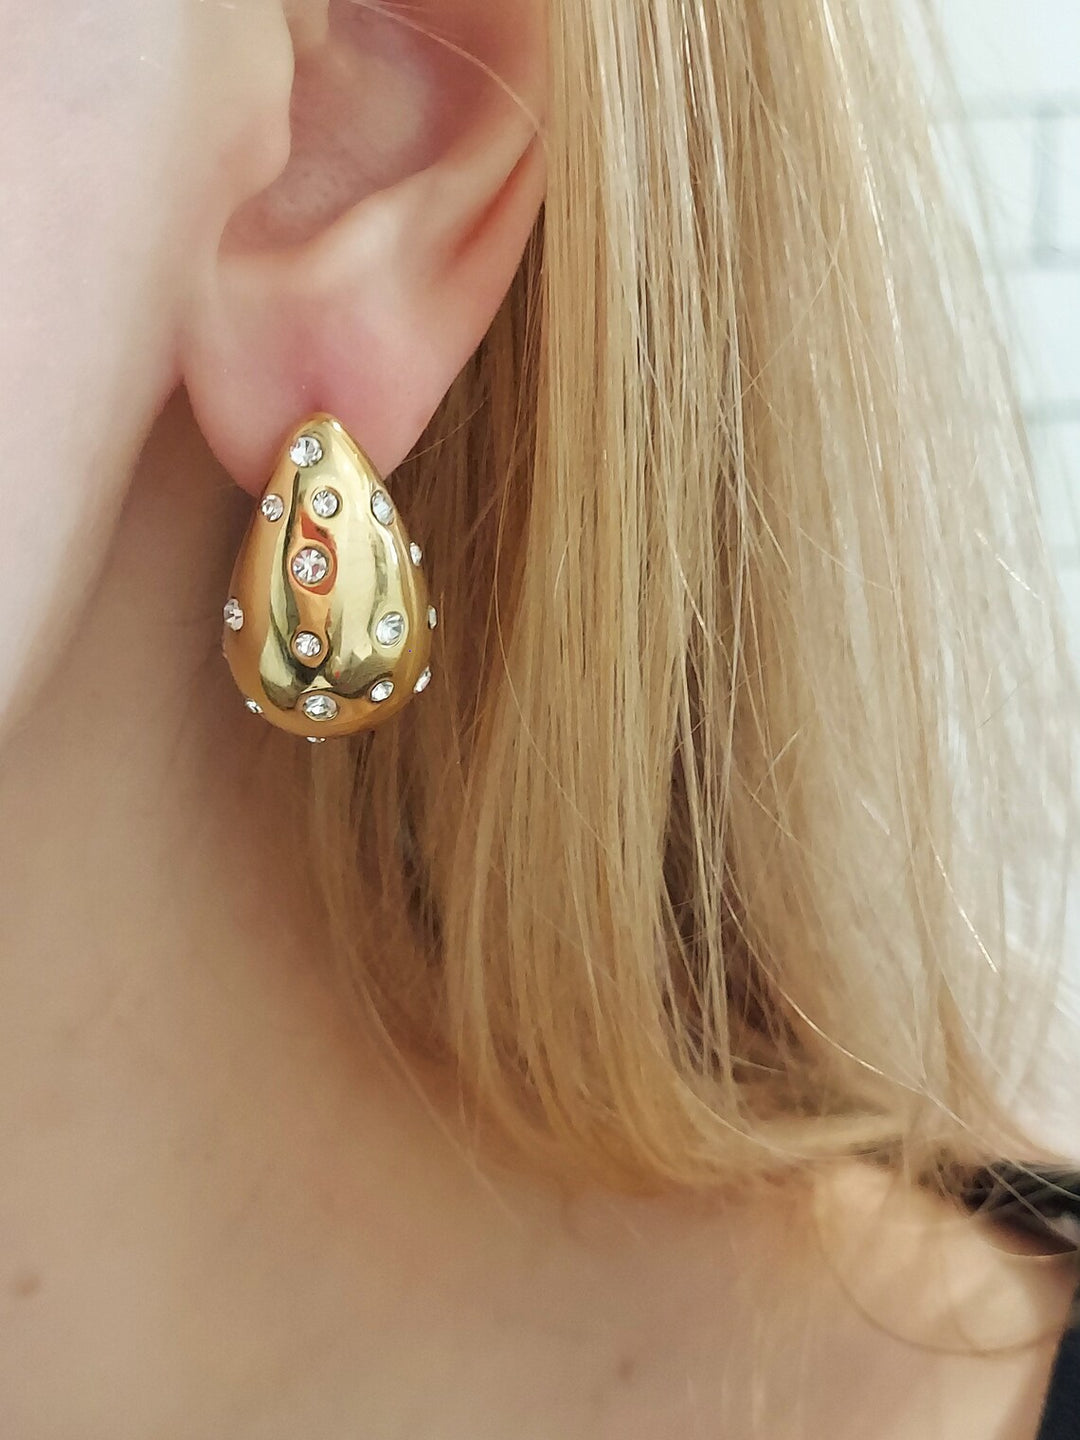 Rhinestone Embellished Water Drop Earrings